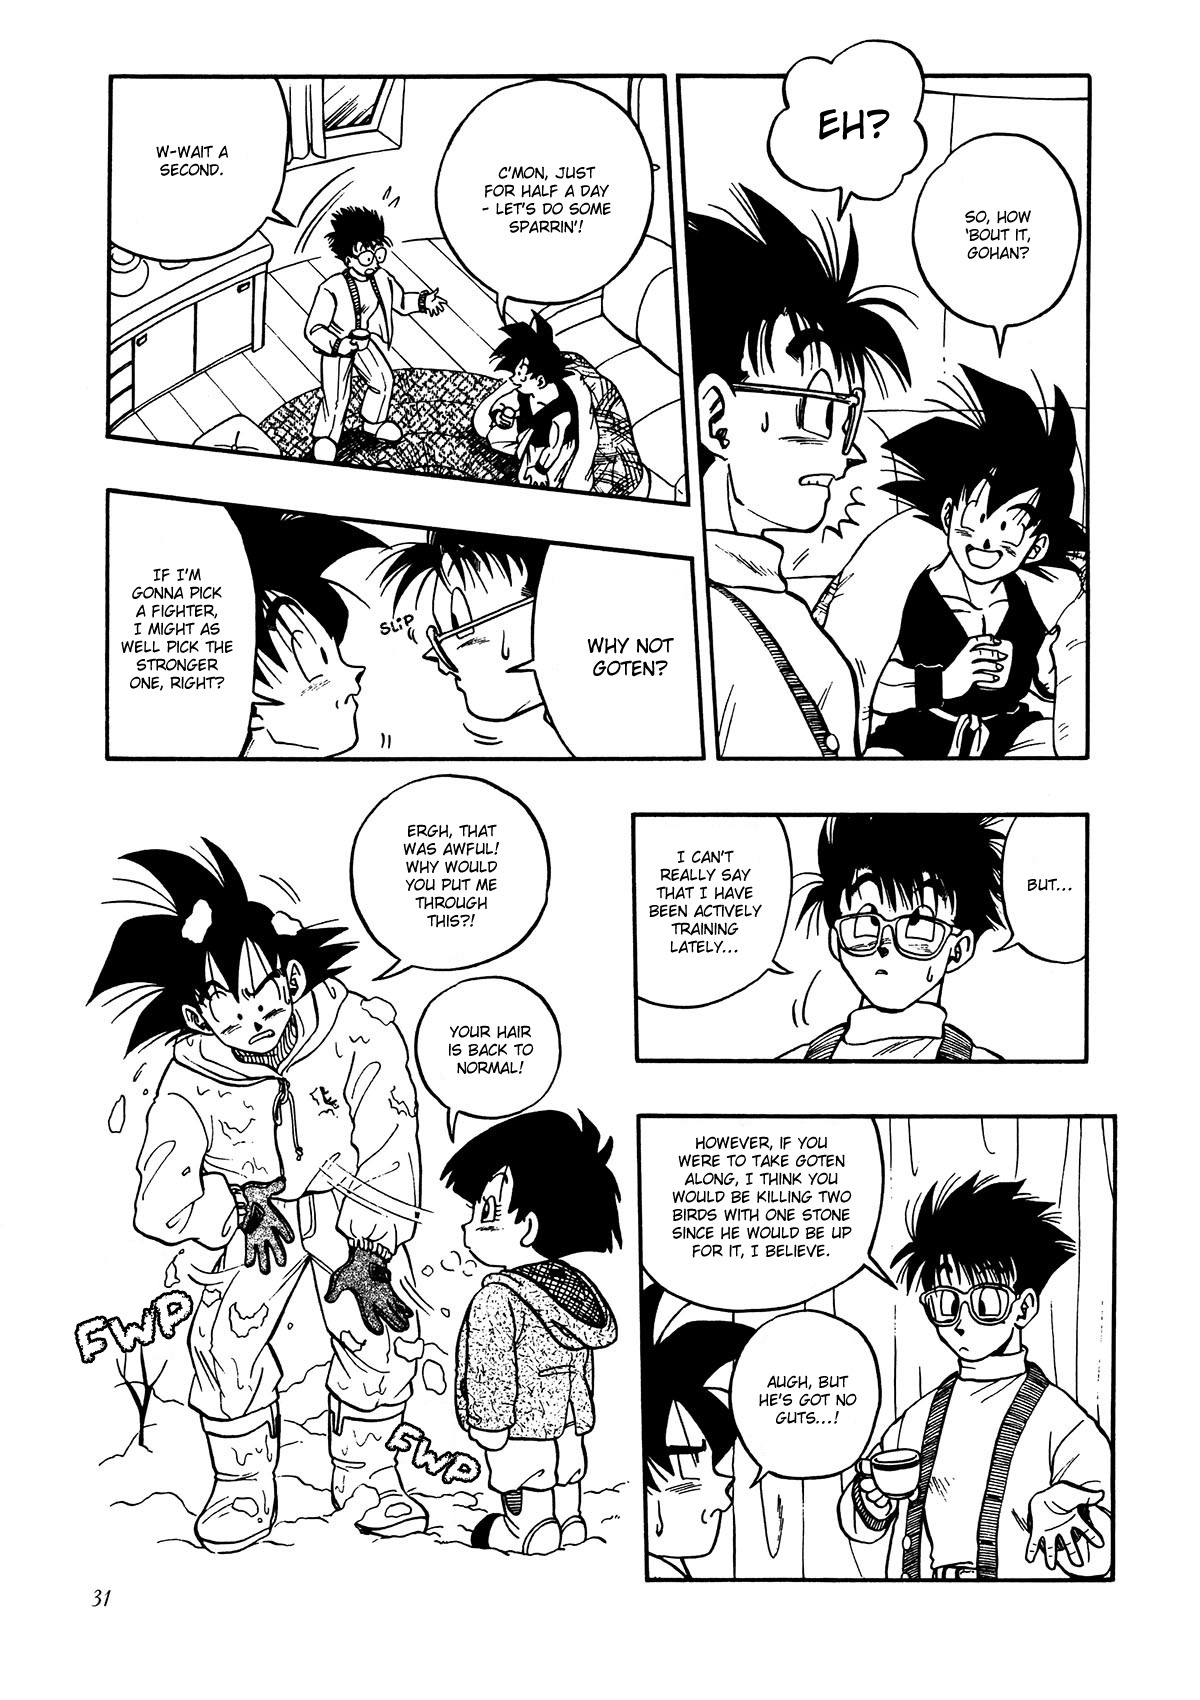 Son Family By: Mattari_illust  Dragon ball super manga, Dragon